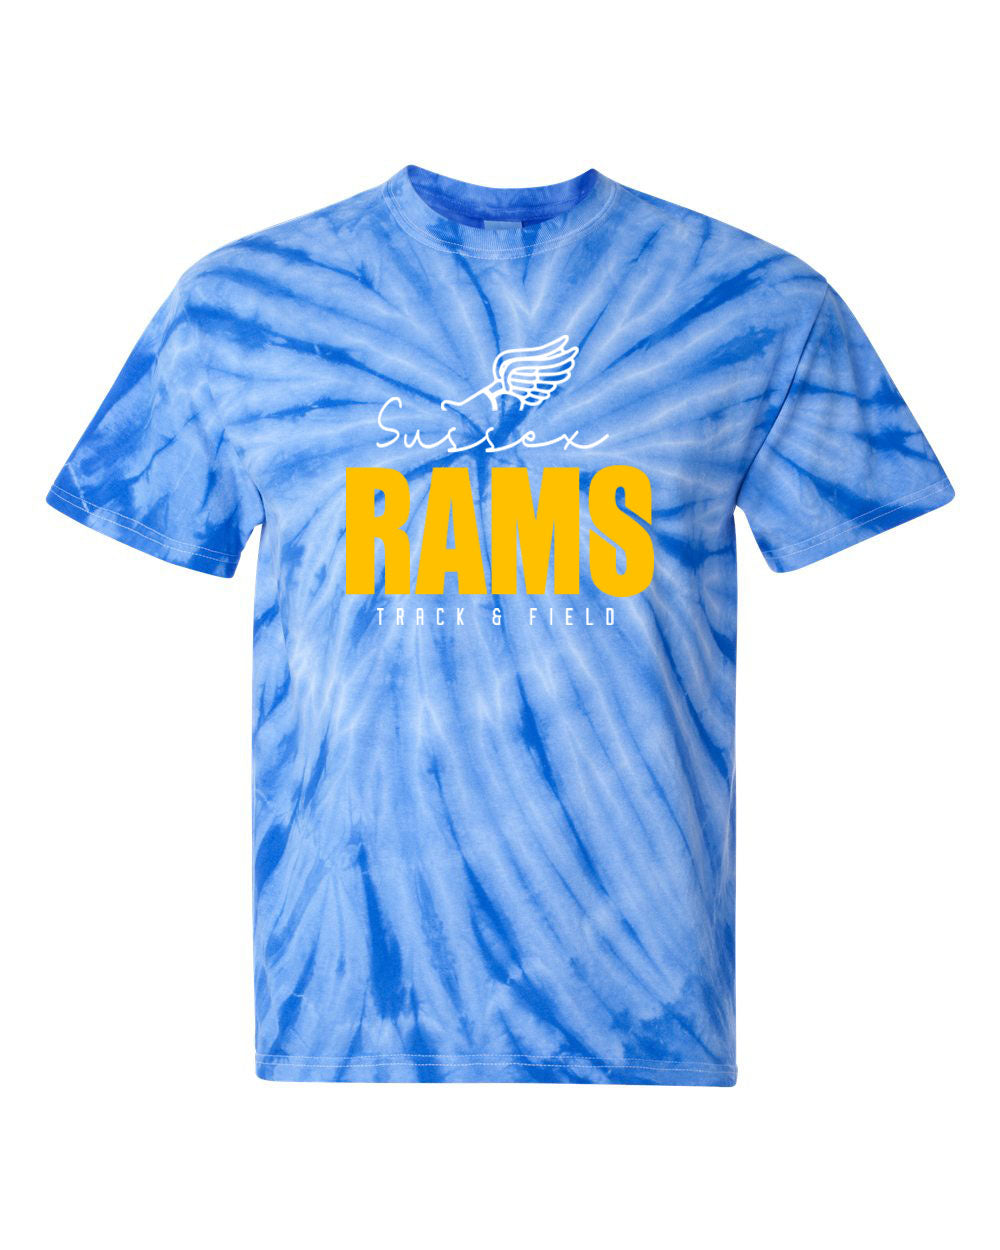 Sussex Rams Track Tie Dye t-shirt Design 4